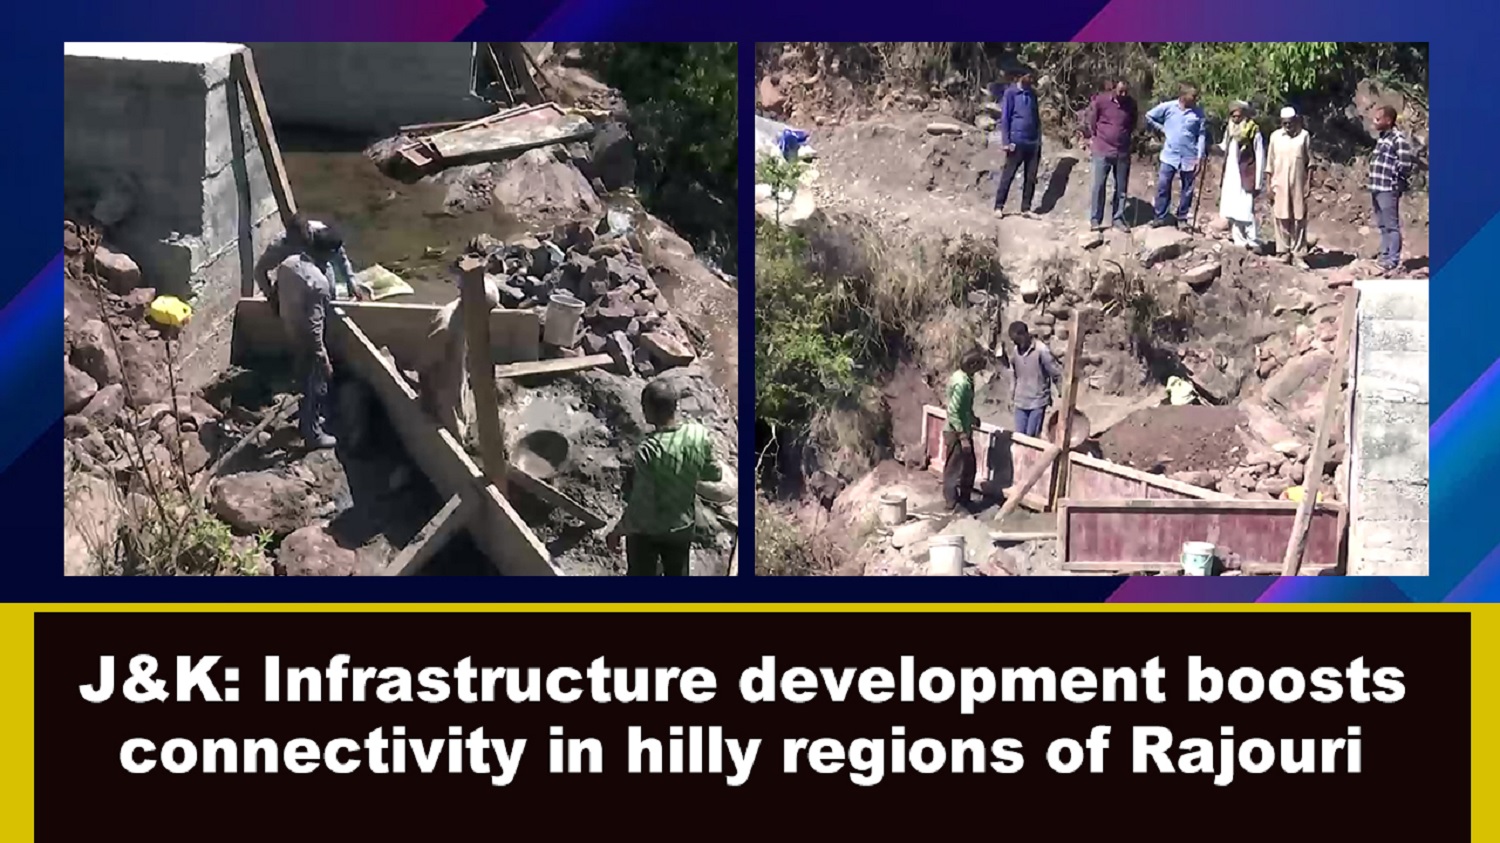 J&K Infrastructure development boosts connectivity in hilly regions of Rajouri